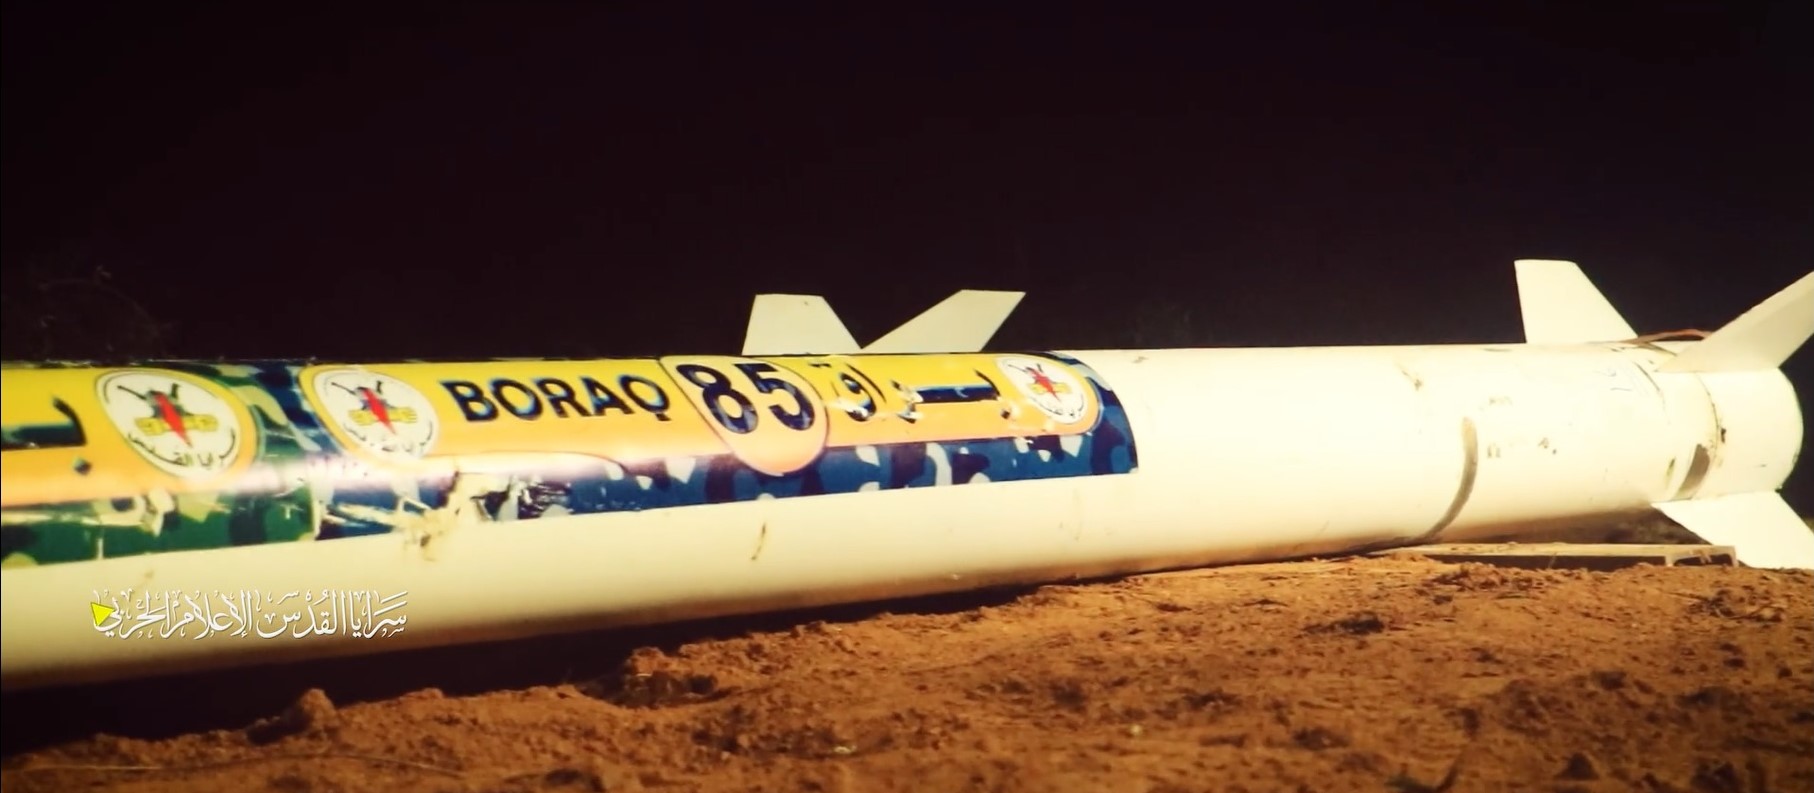 Islamic Jihad Boraq-85 rocket